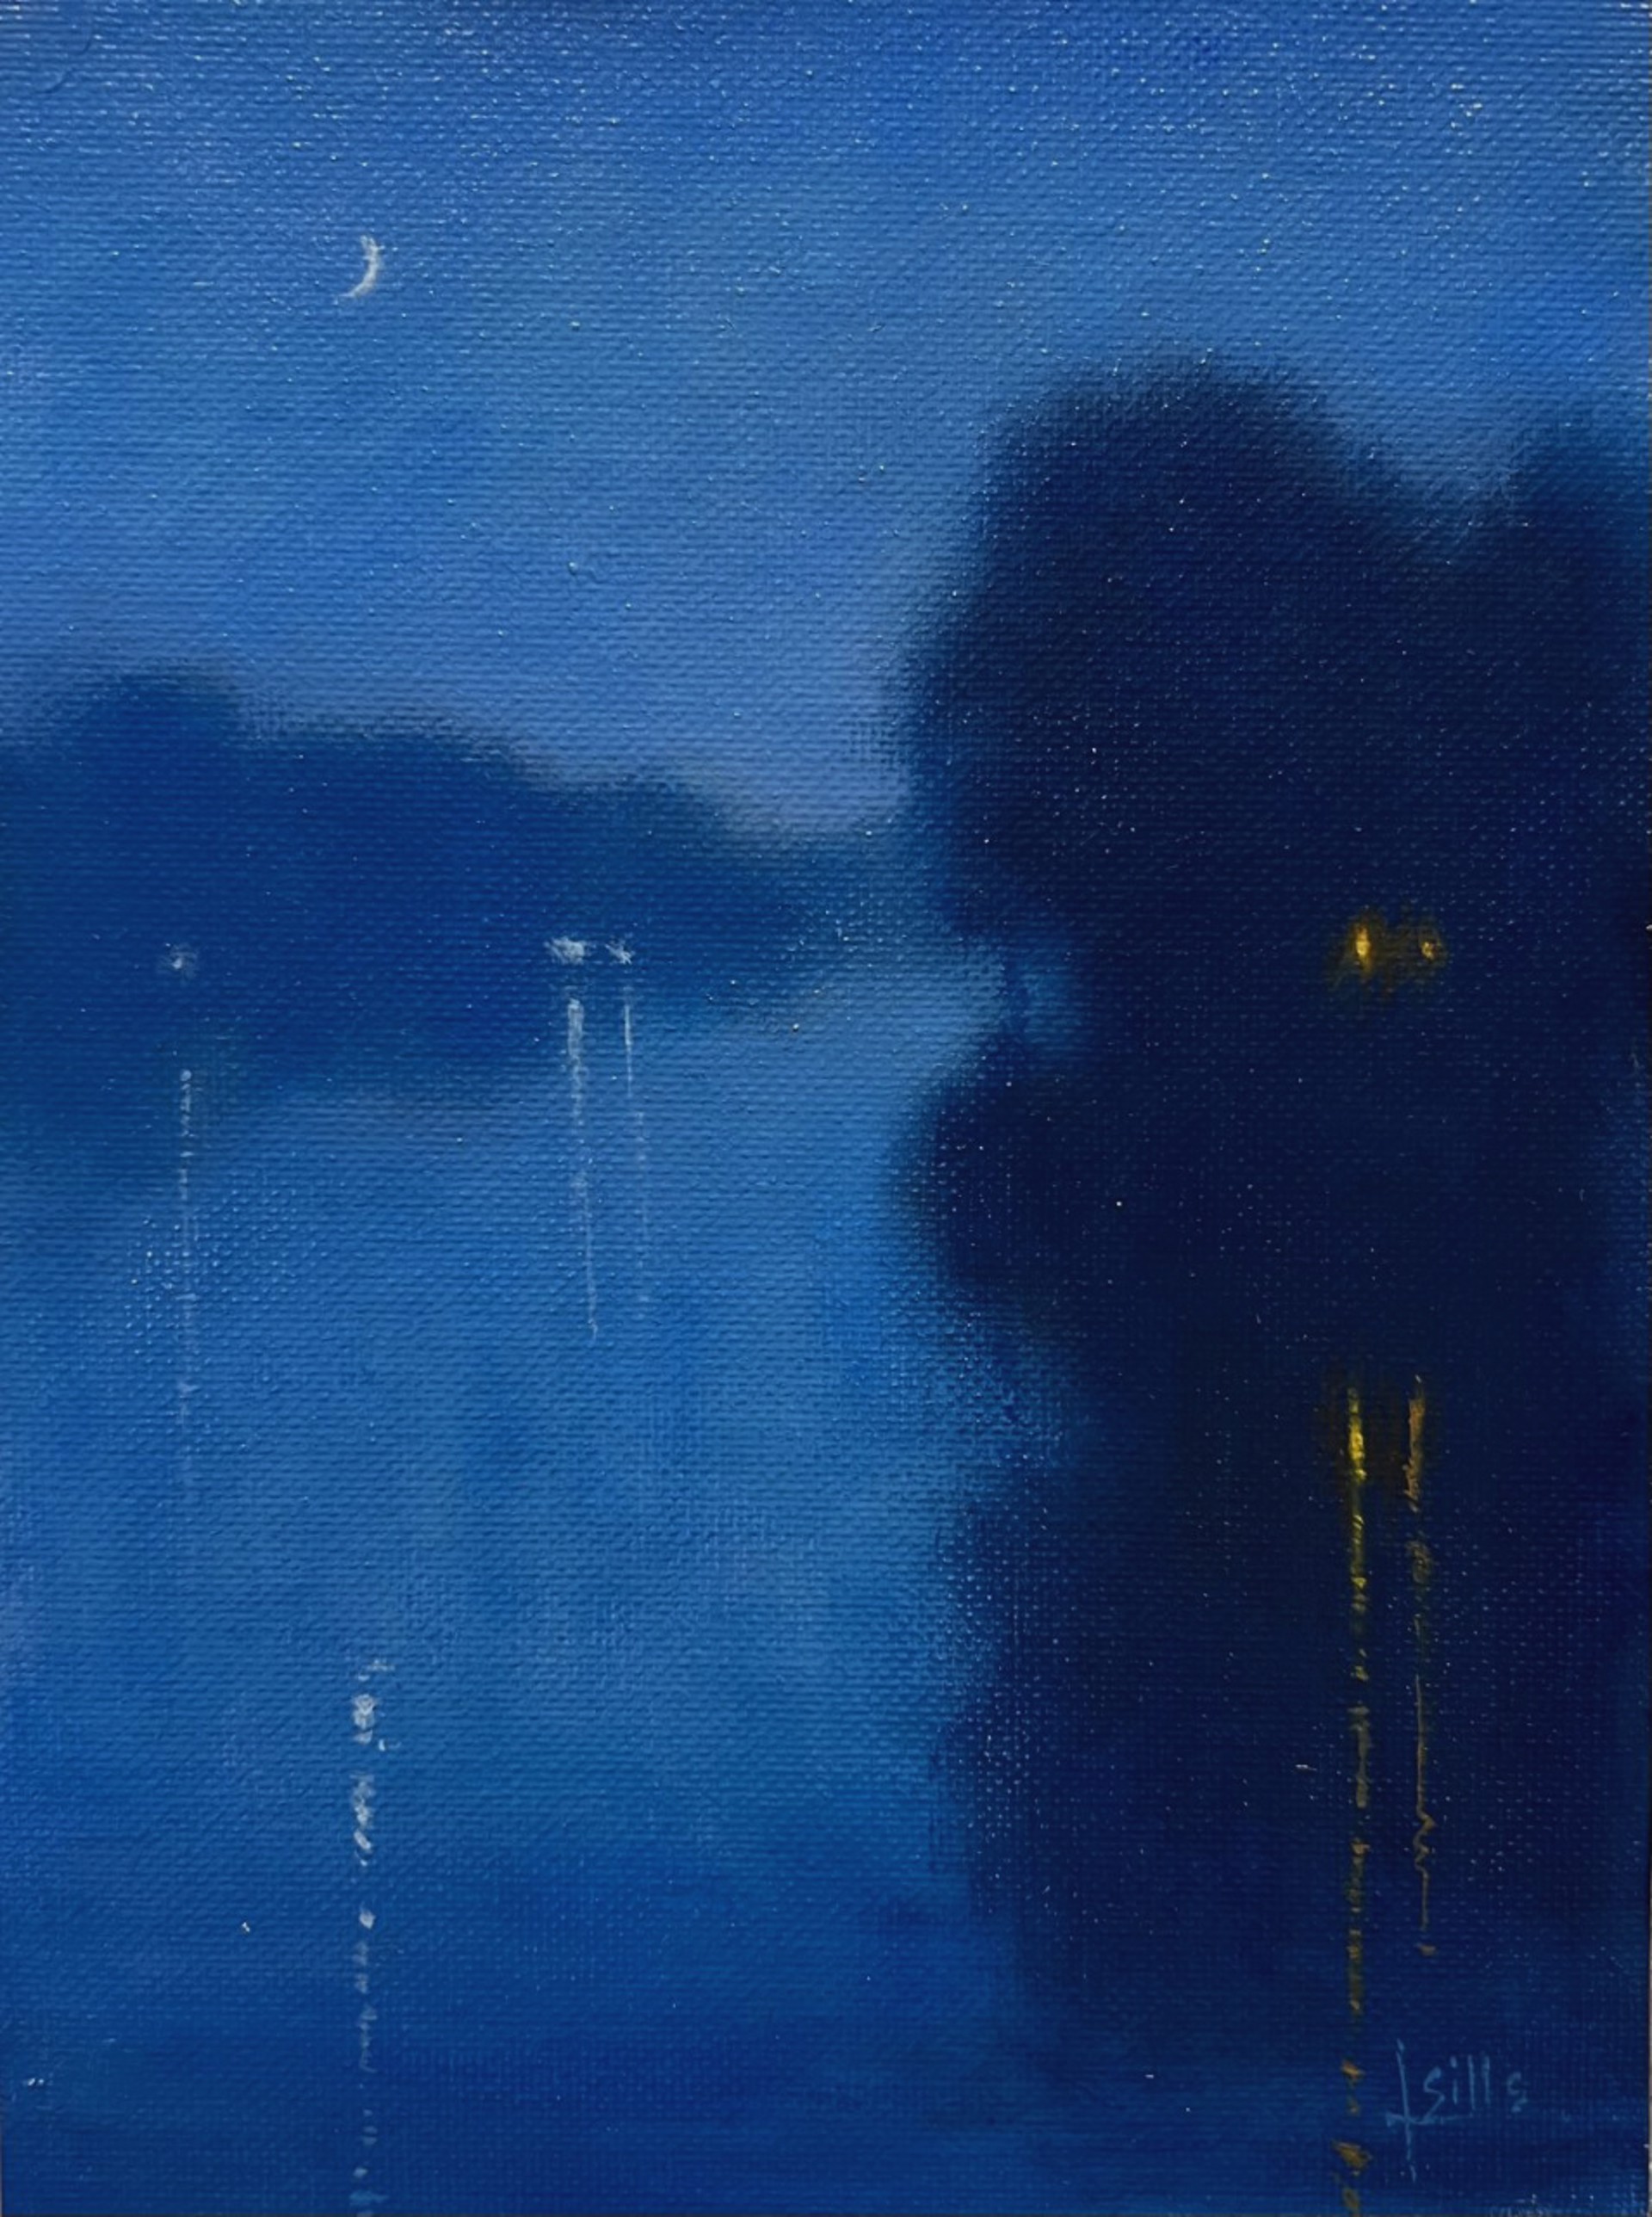 Night Time Reflections by John Brandon Sills